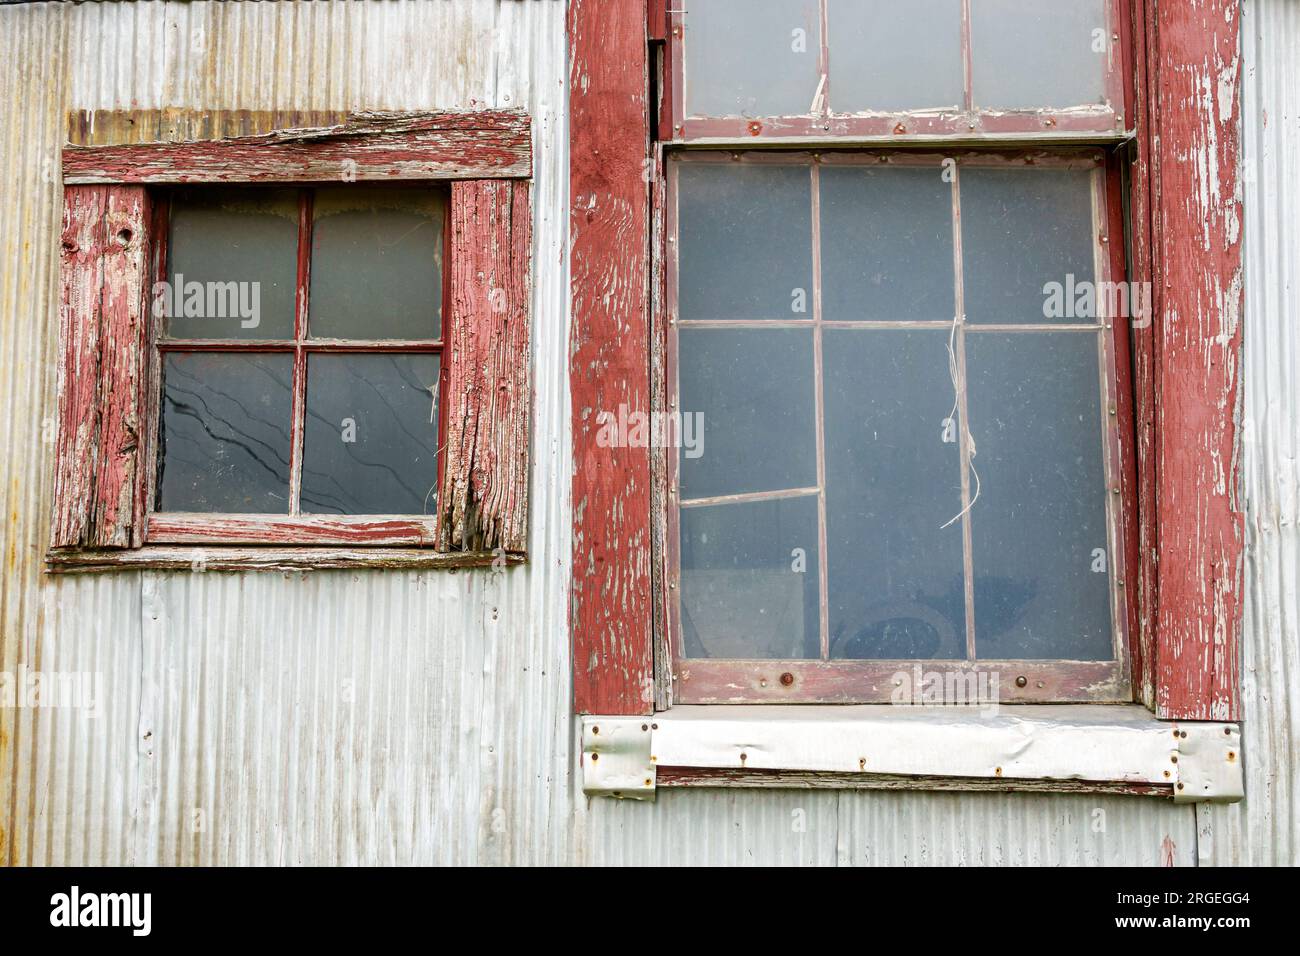 Ellenboro North Carolina,Colfax Cotton Gin closed abandoned vacant shut down,agriculture economy job losses,building windows Stock Photo